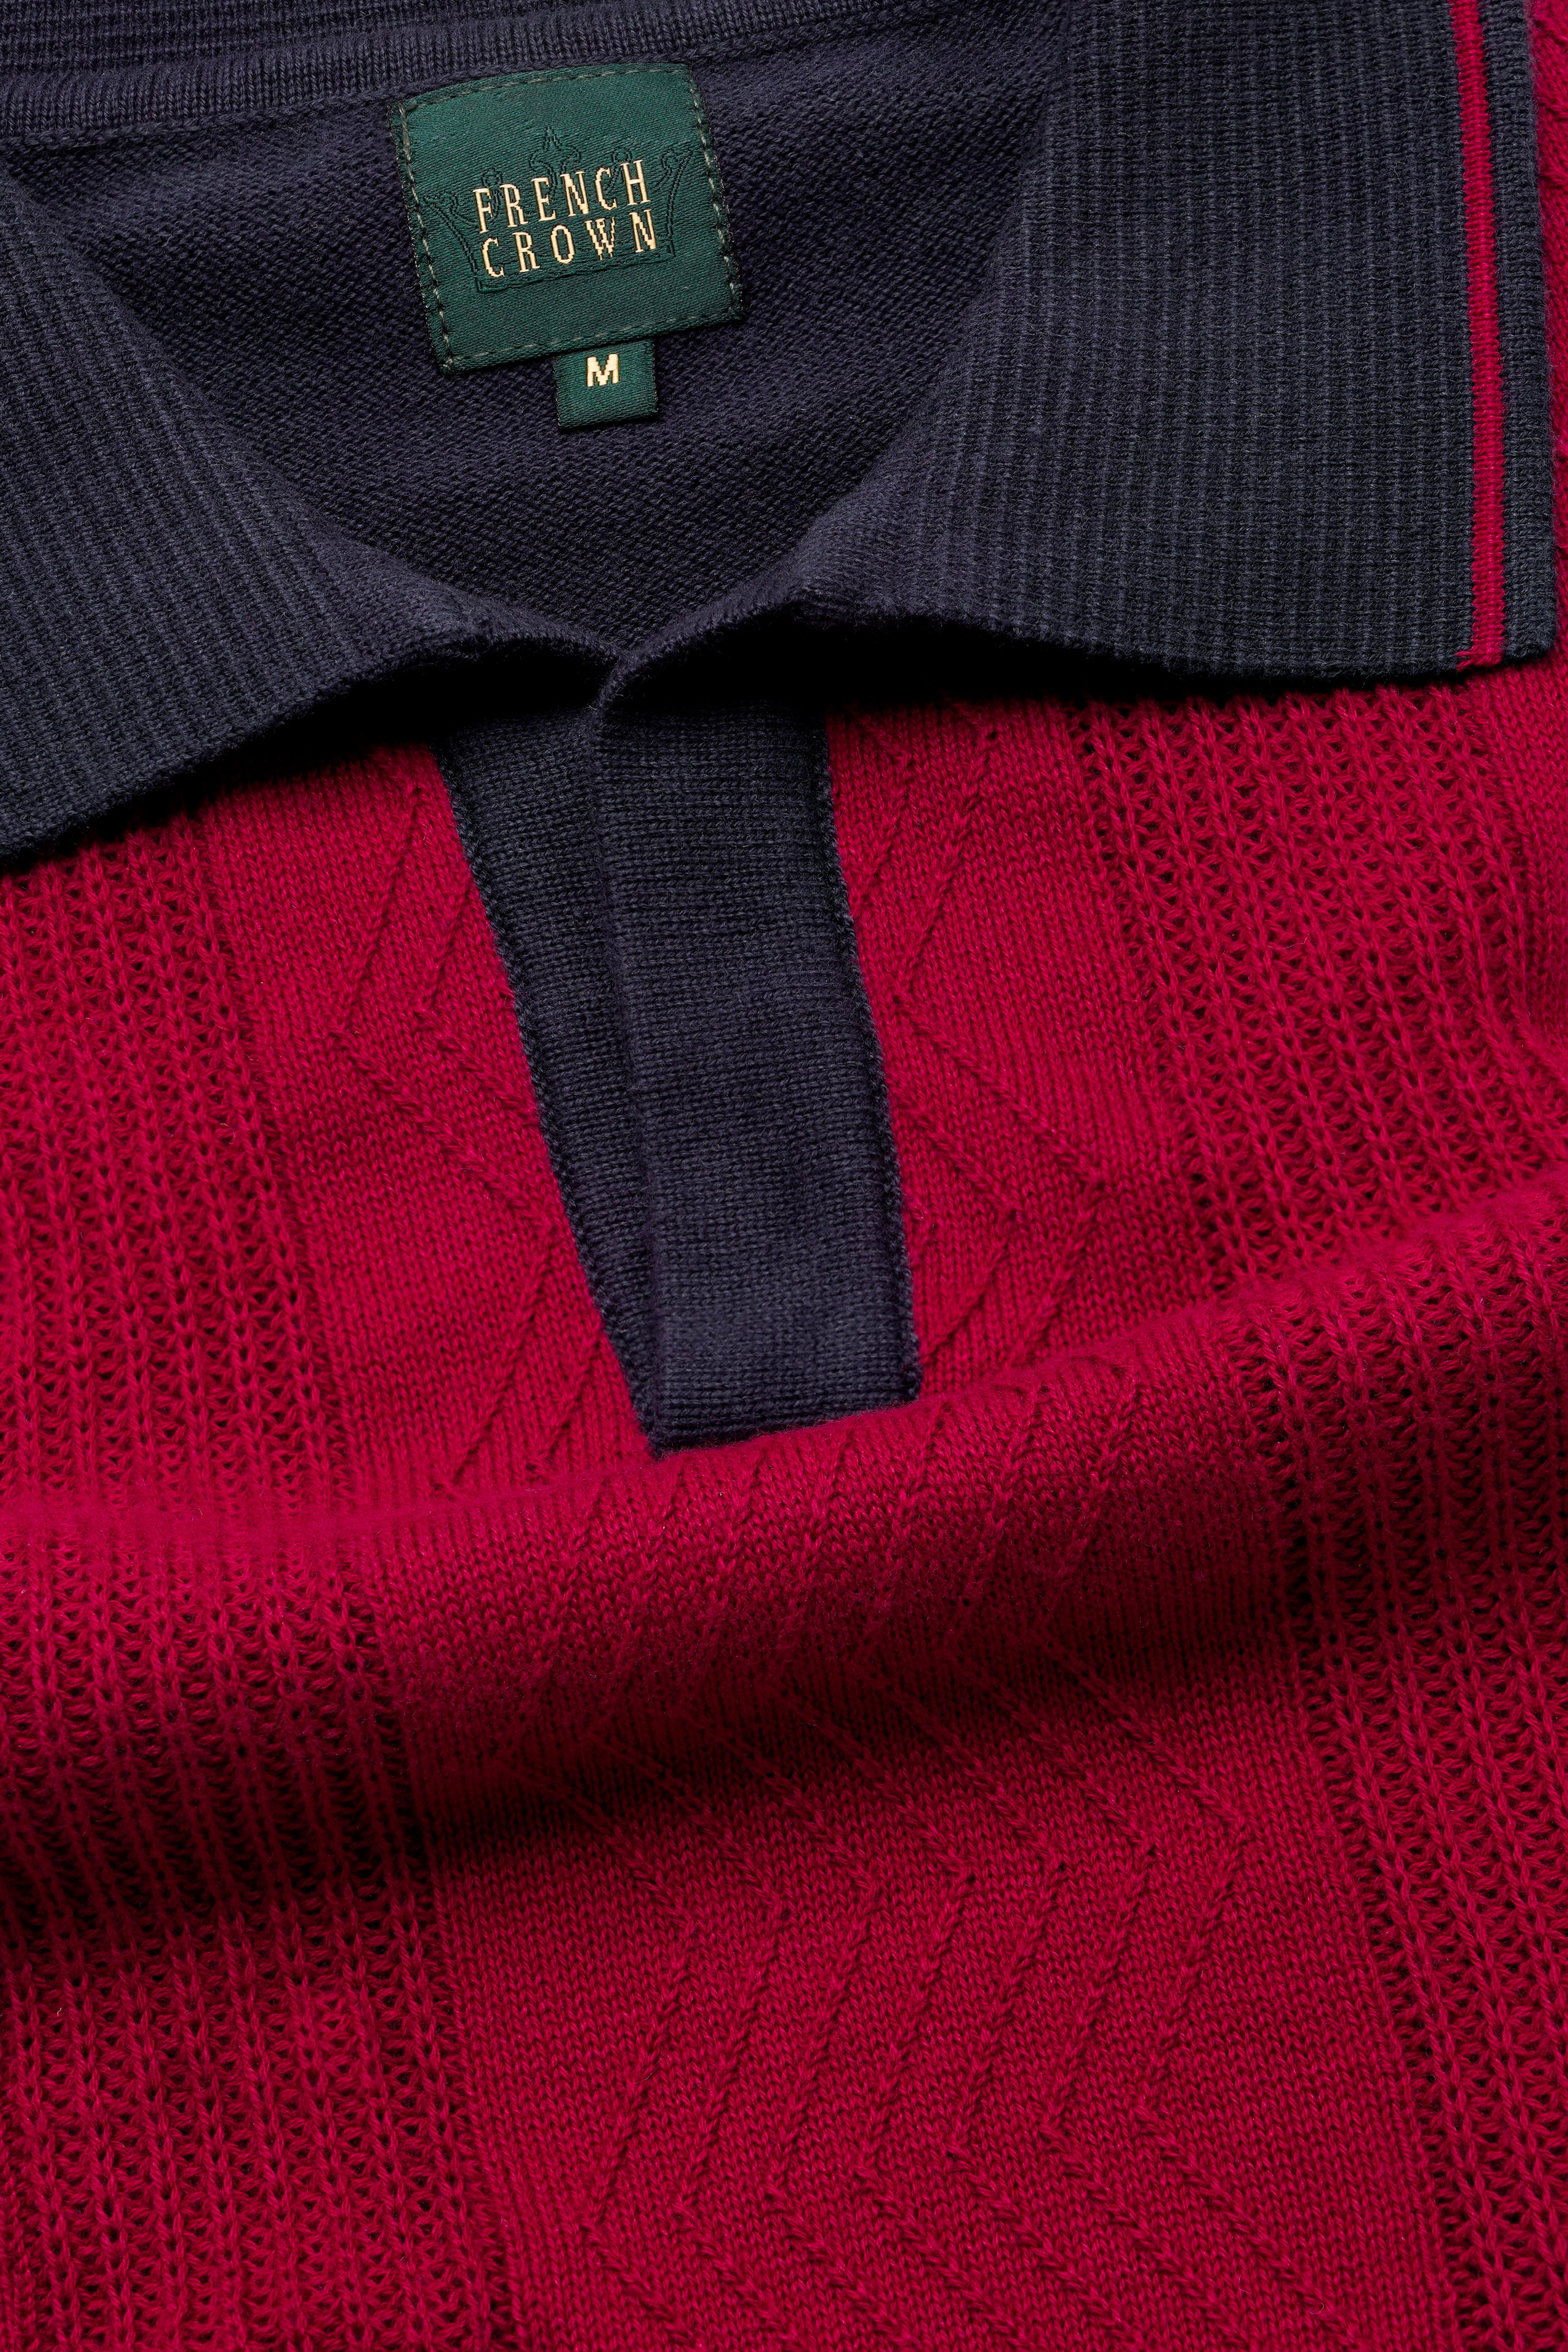 Paprika Red and Thunder Gray Premium Cotton Flat Knit Polo TS929-S, TS929-M, TS929-L, TS929-XL, TS929-XXL